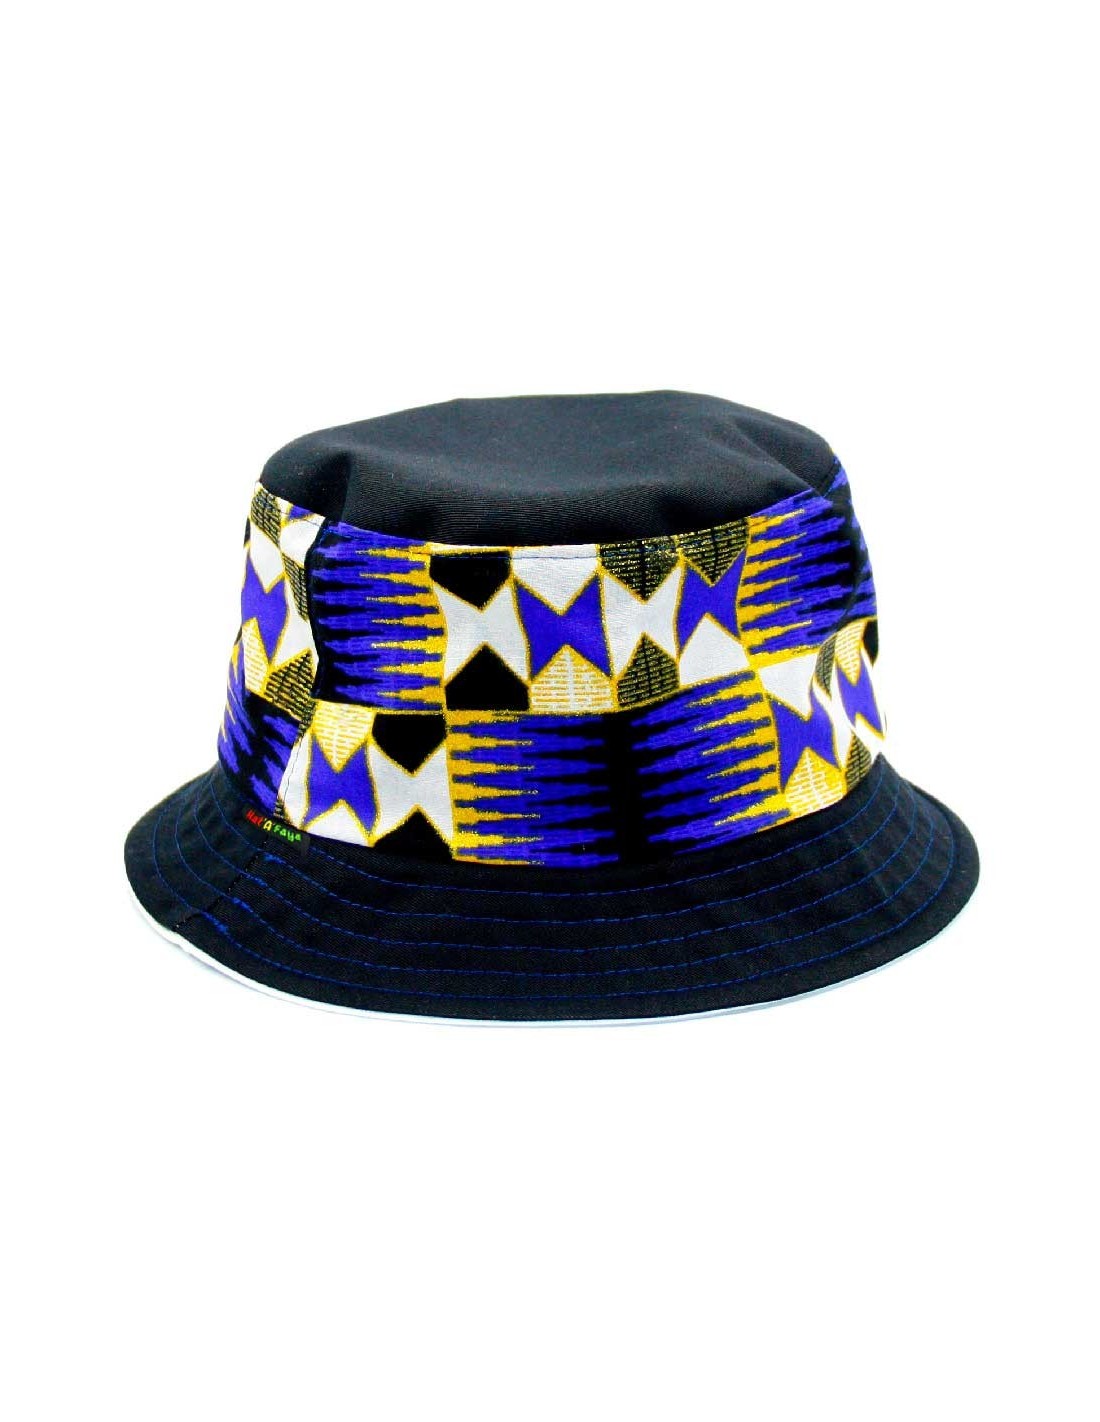 ROYAL BLUE Bucket hat with African print Wax fabric. Handmade